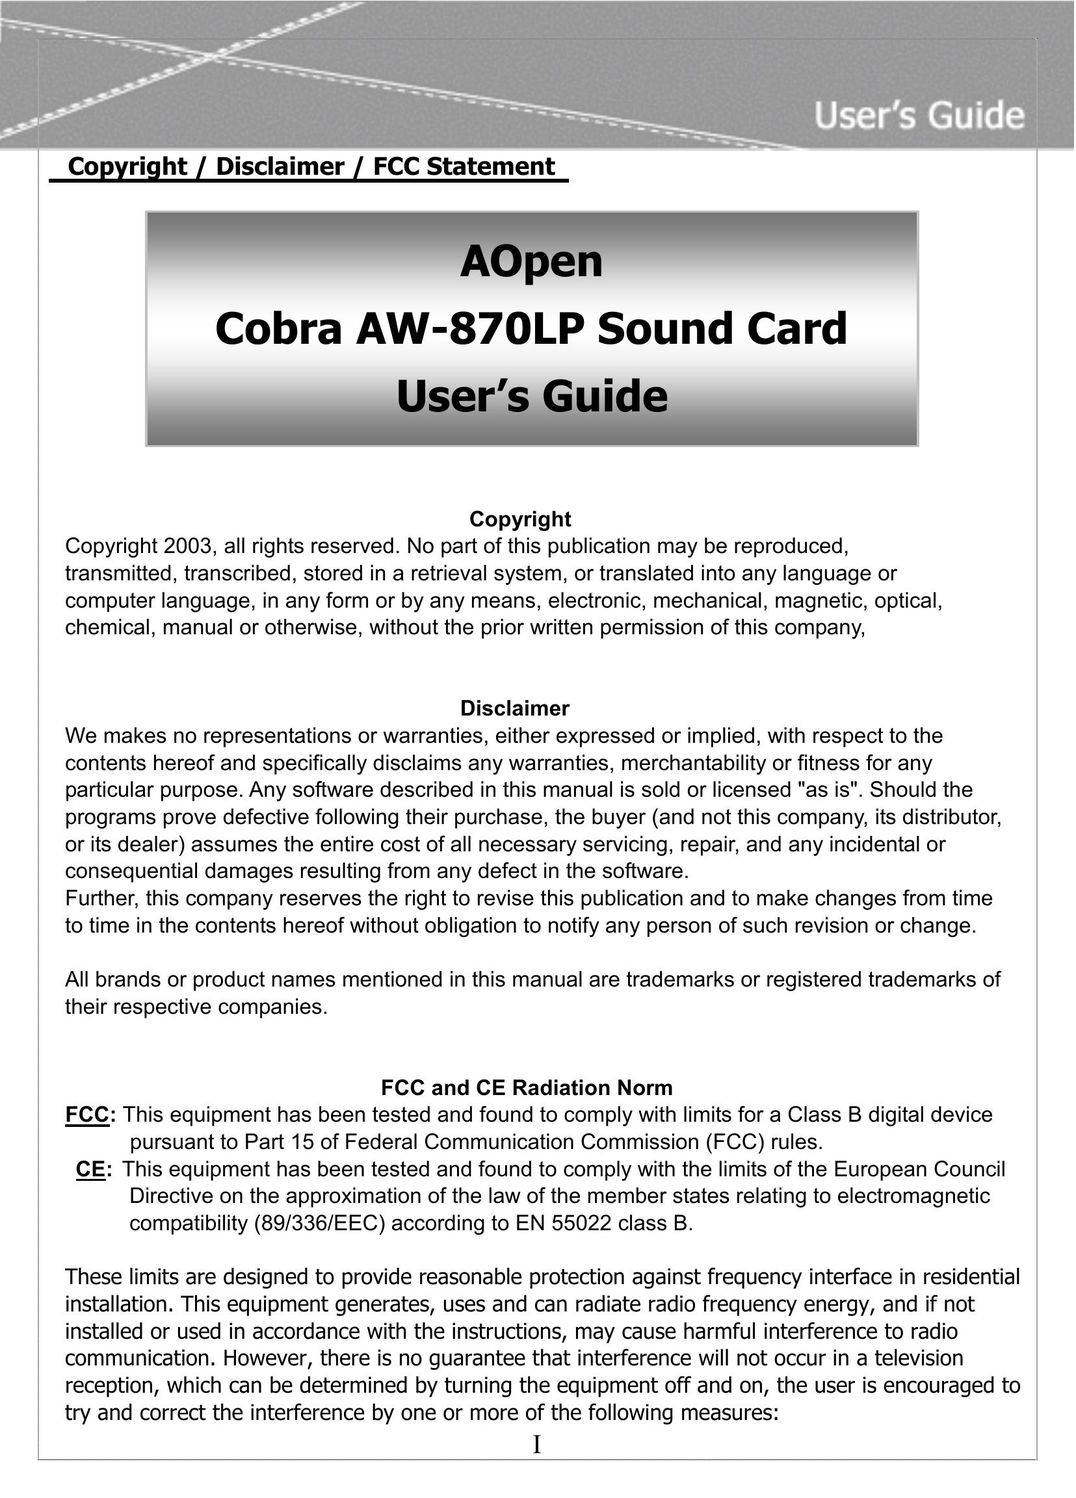 AOpen AW-870LP Computer Hardware User Manual